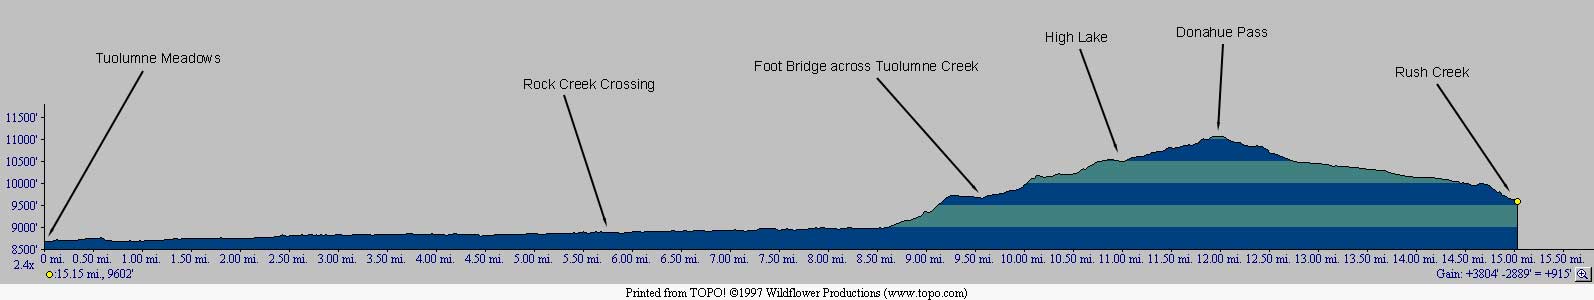 Segment Profile: Tuolumne Meadows to Donahue Pass